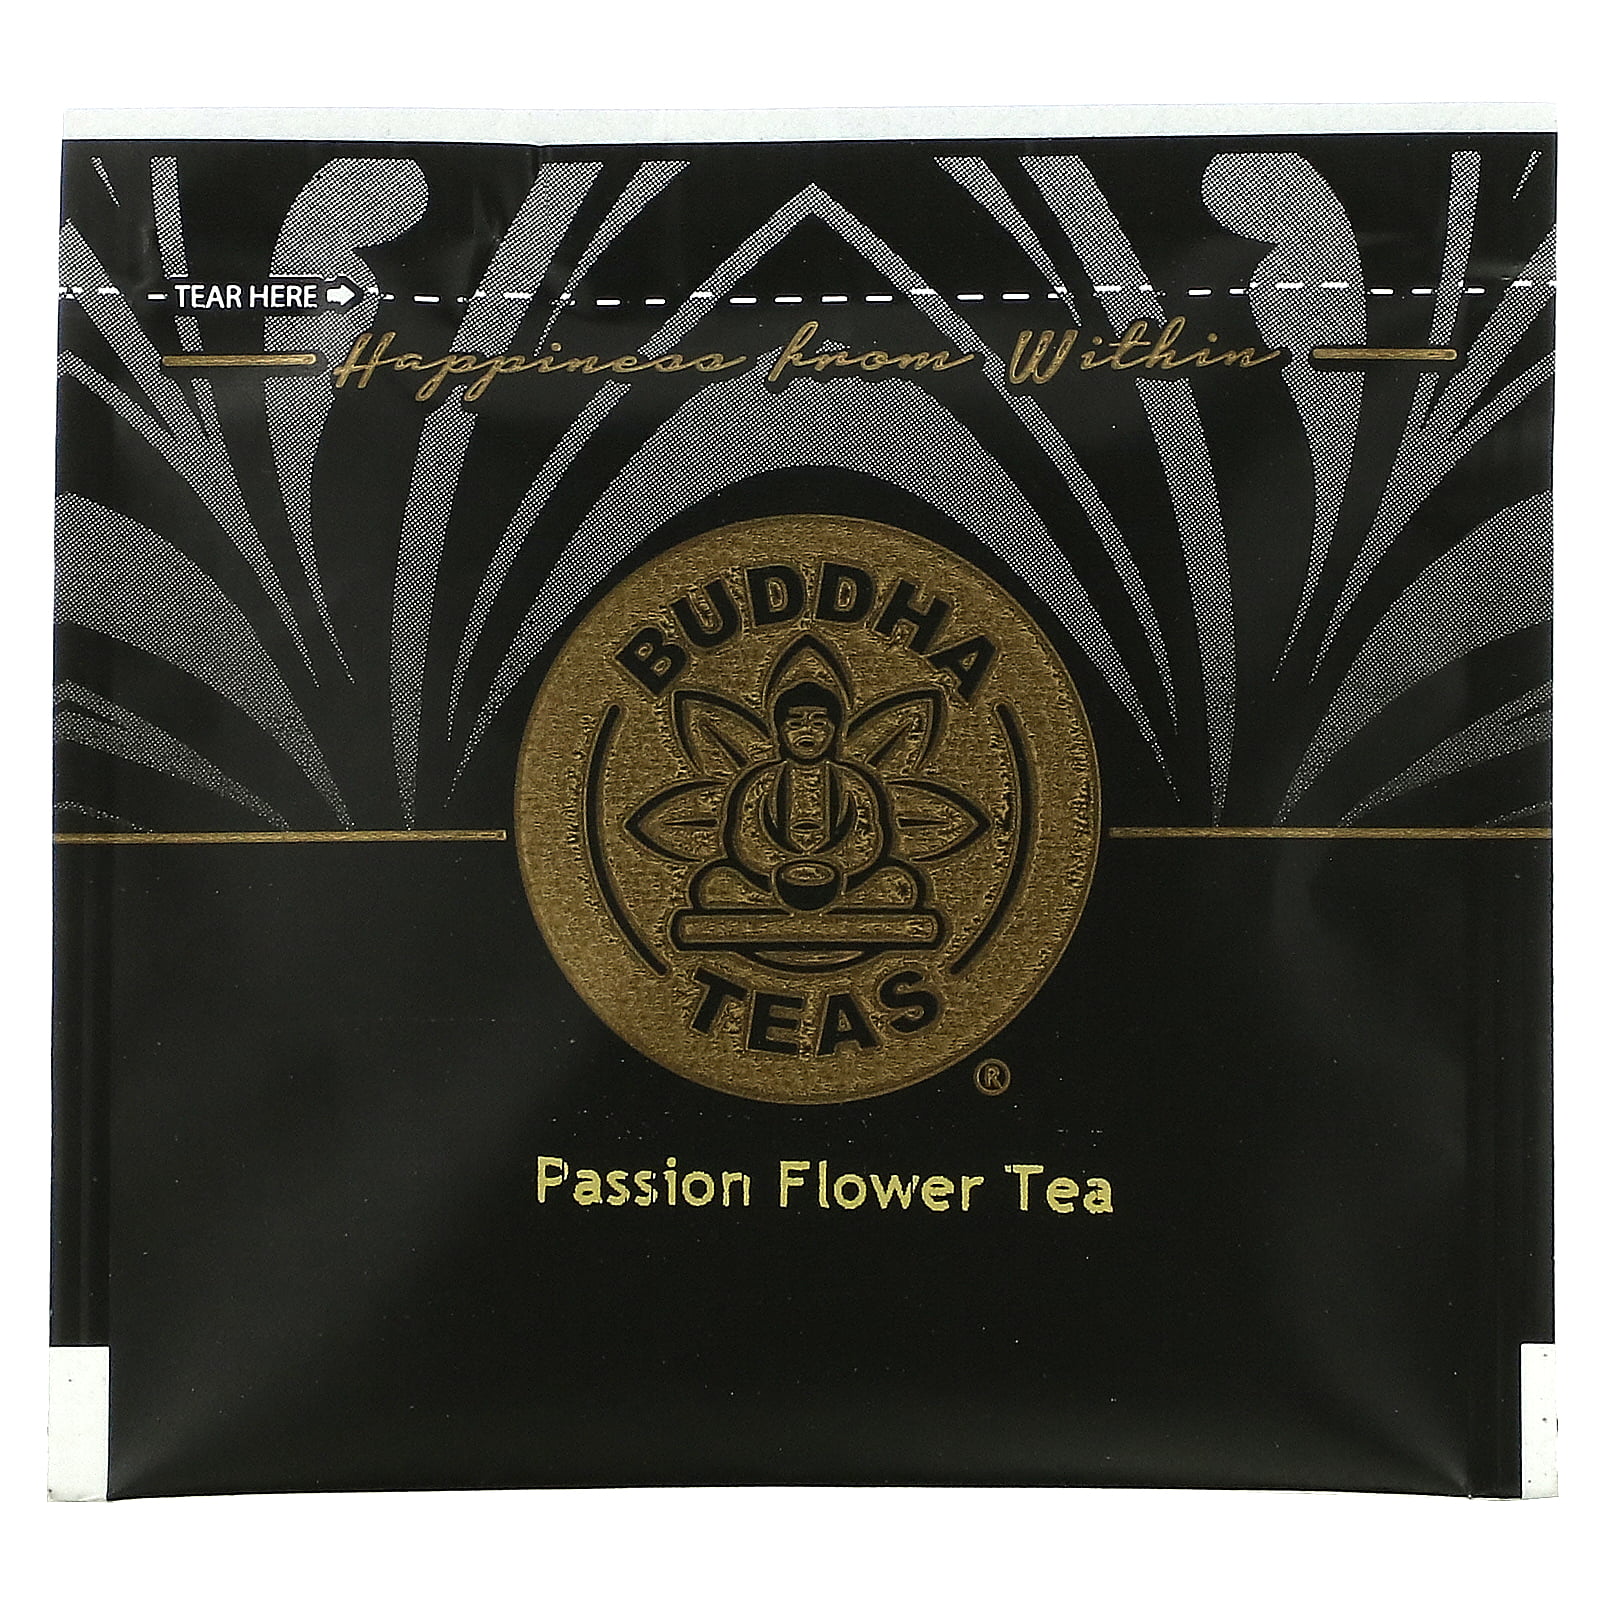 buddha teas passion flower tea, 18 ct